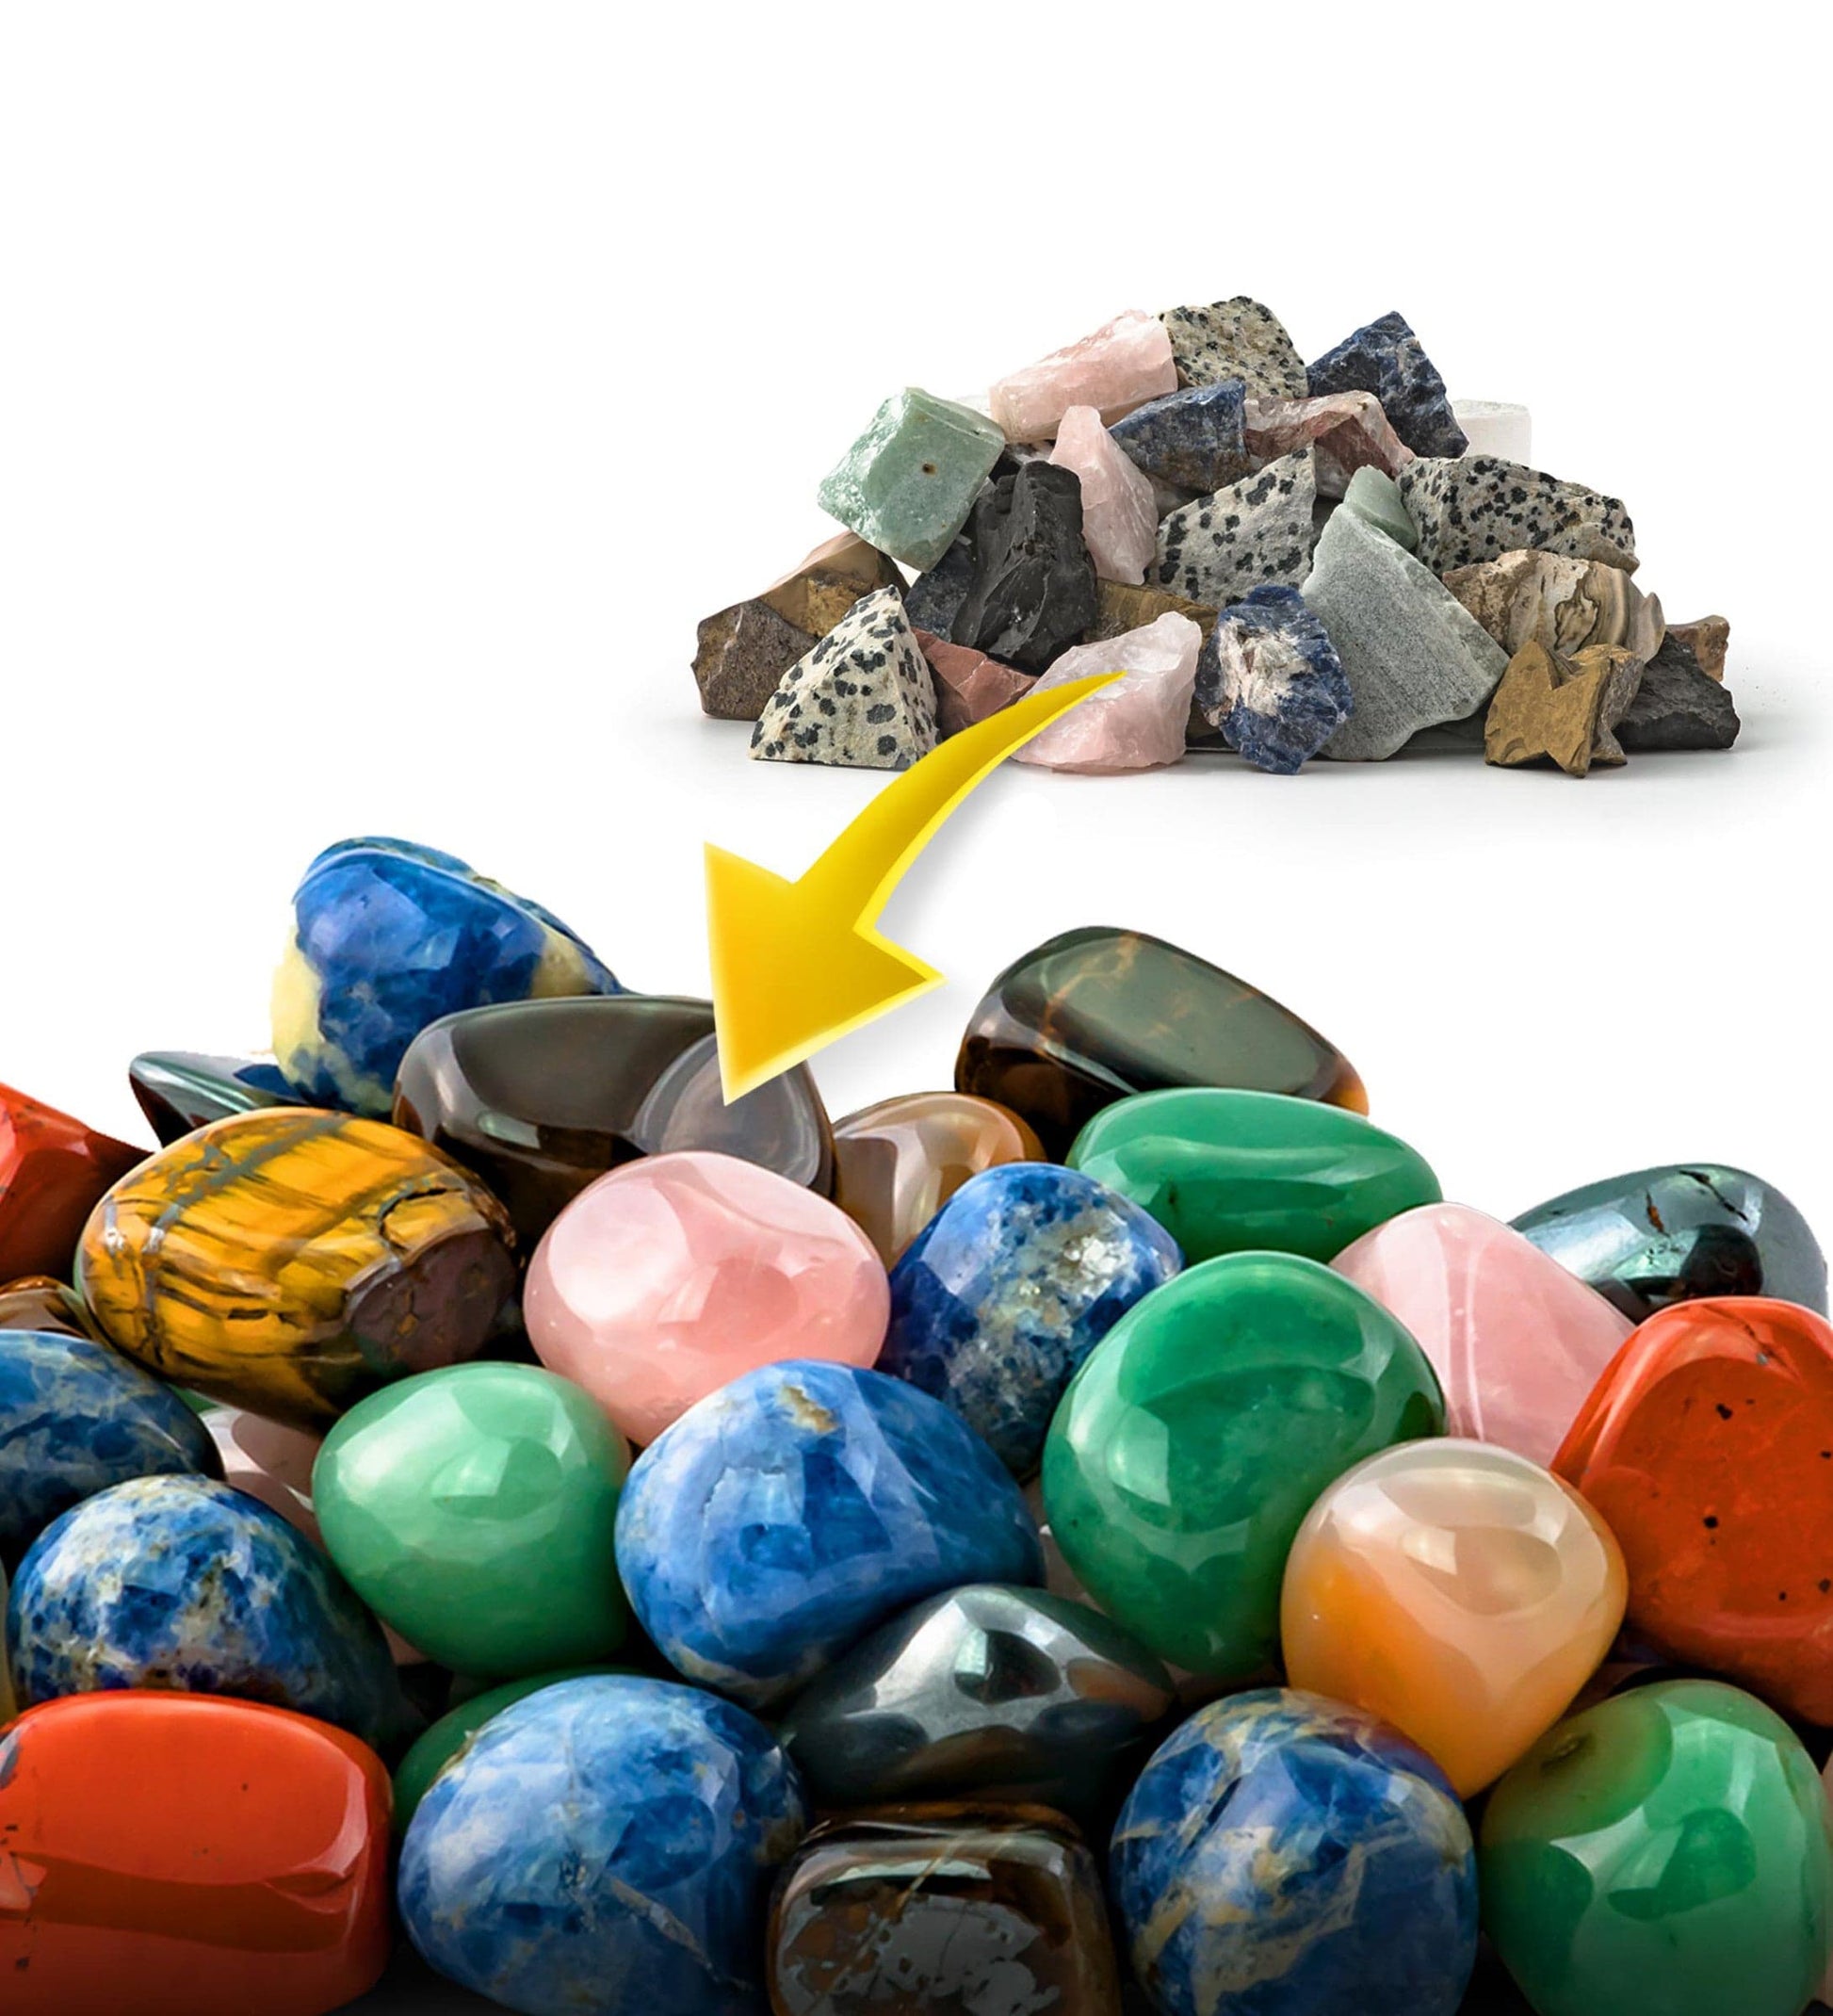 Tumbler Accessory Kit: Rocks, Grit, & Jewelry-Making